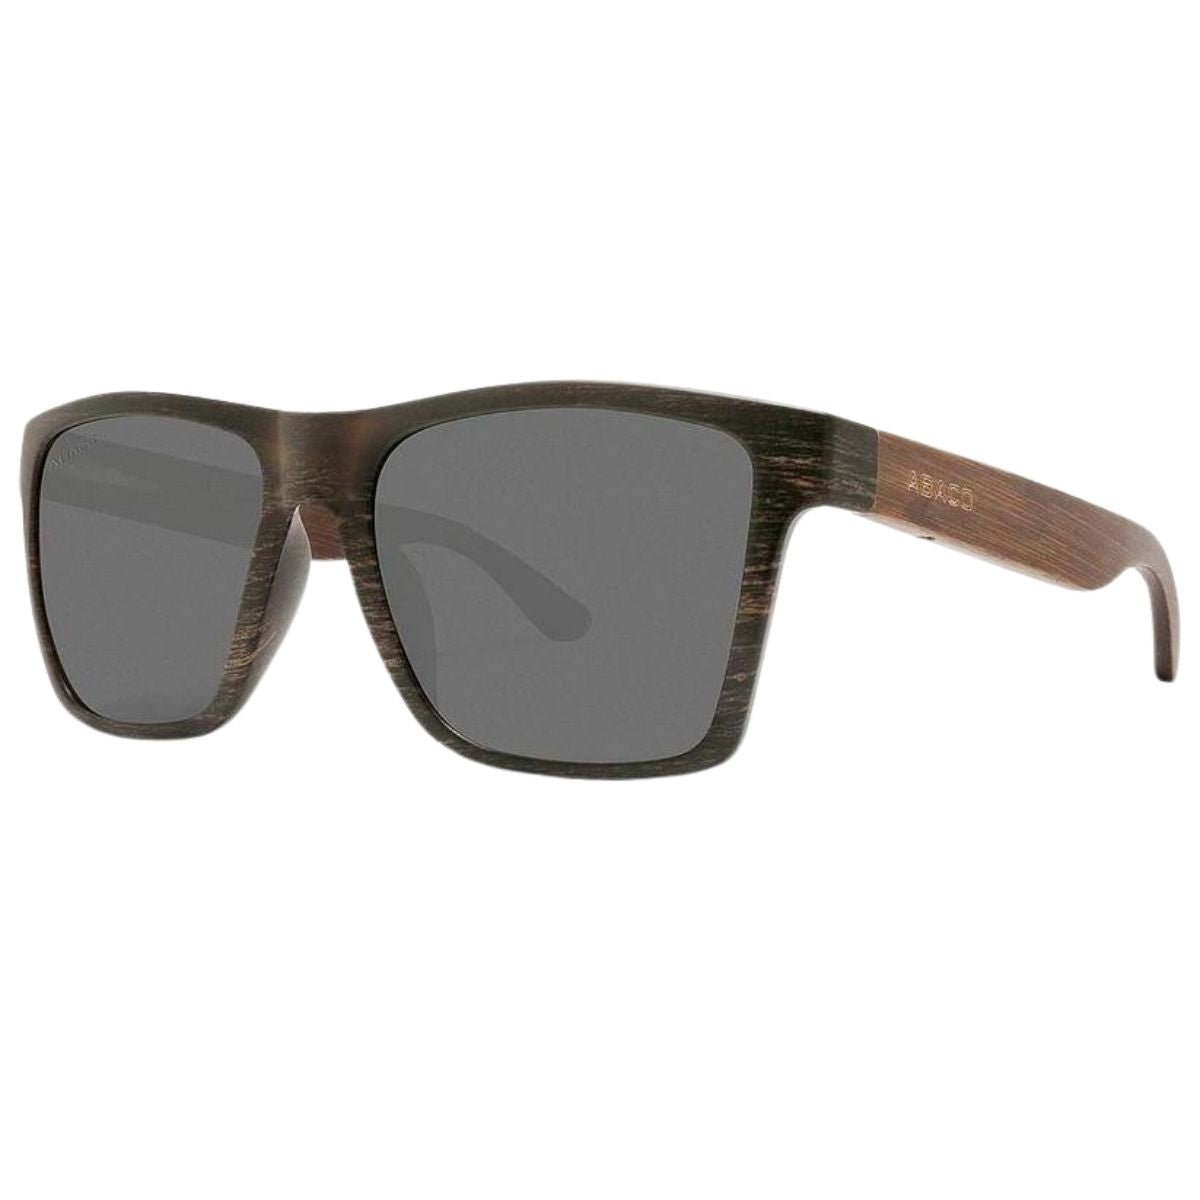 Abaco Cruiser Sunglasses in Black Wood/Grey - BoardCo